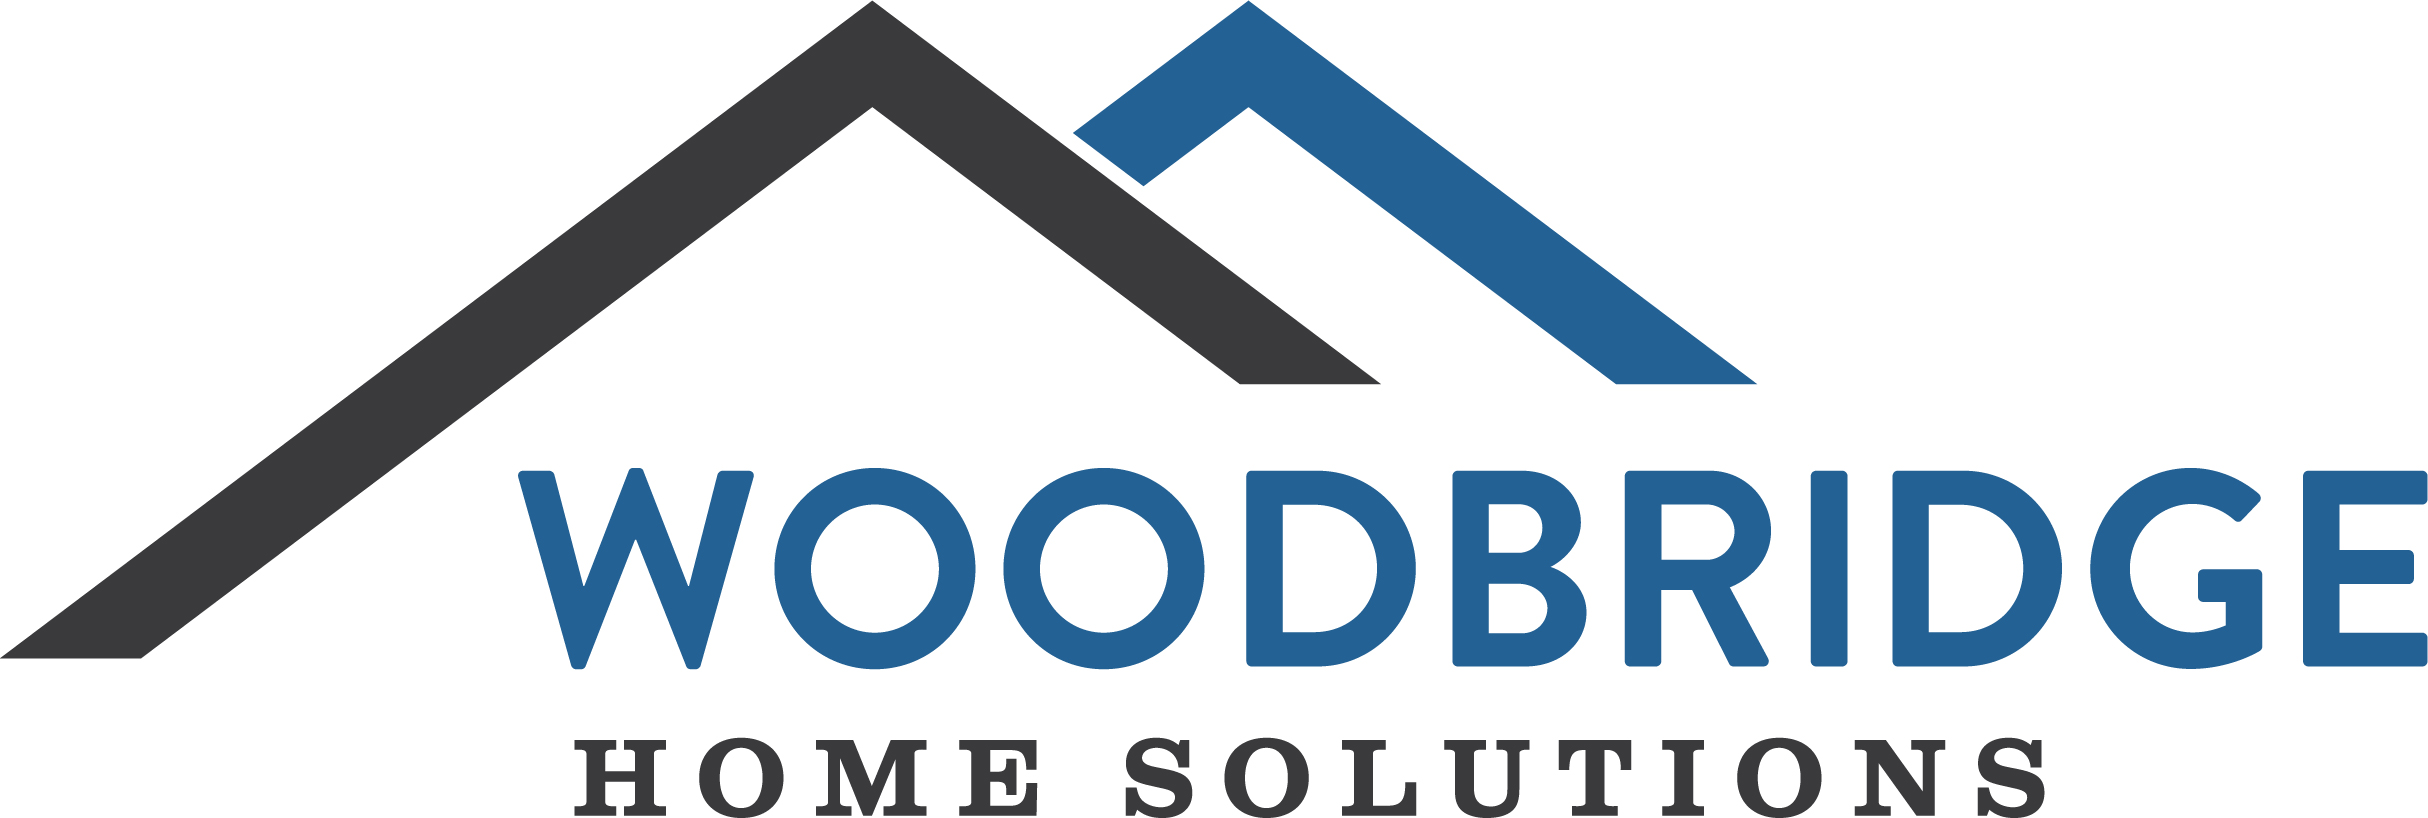 Woodbridge Home Solutions